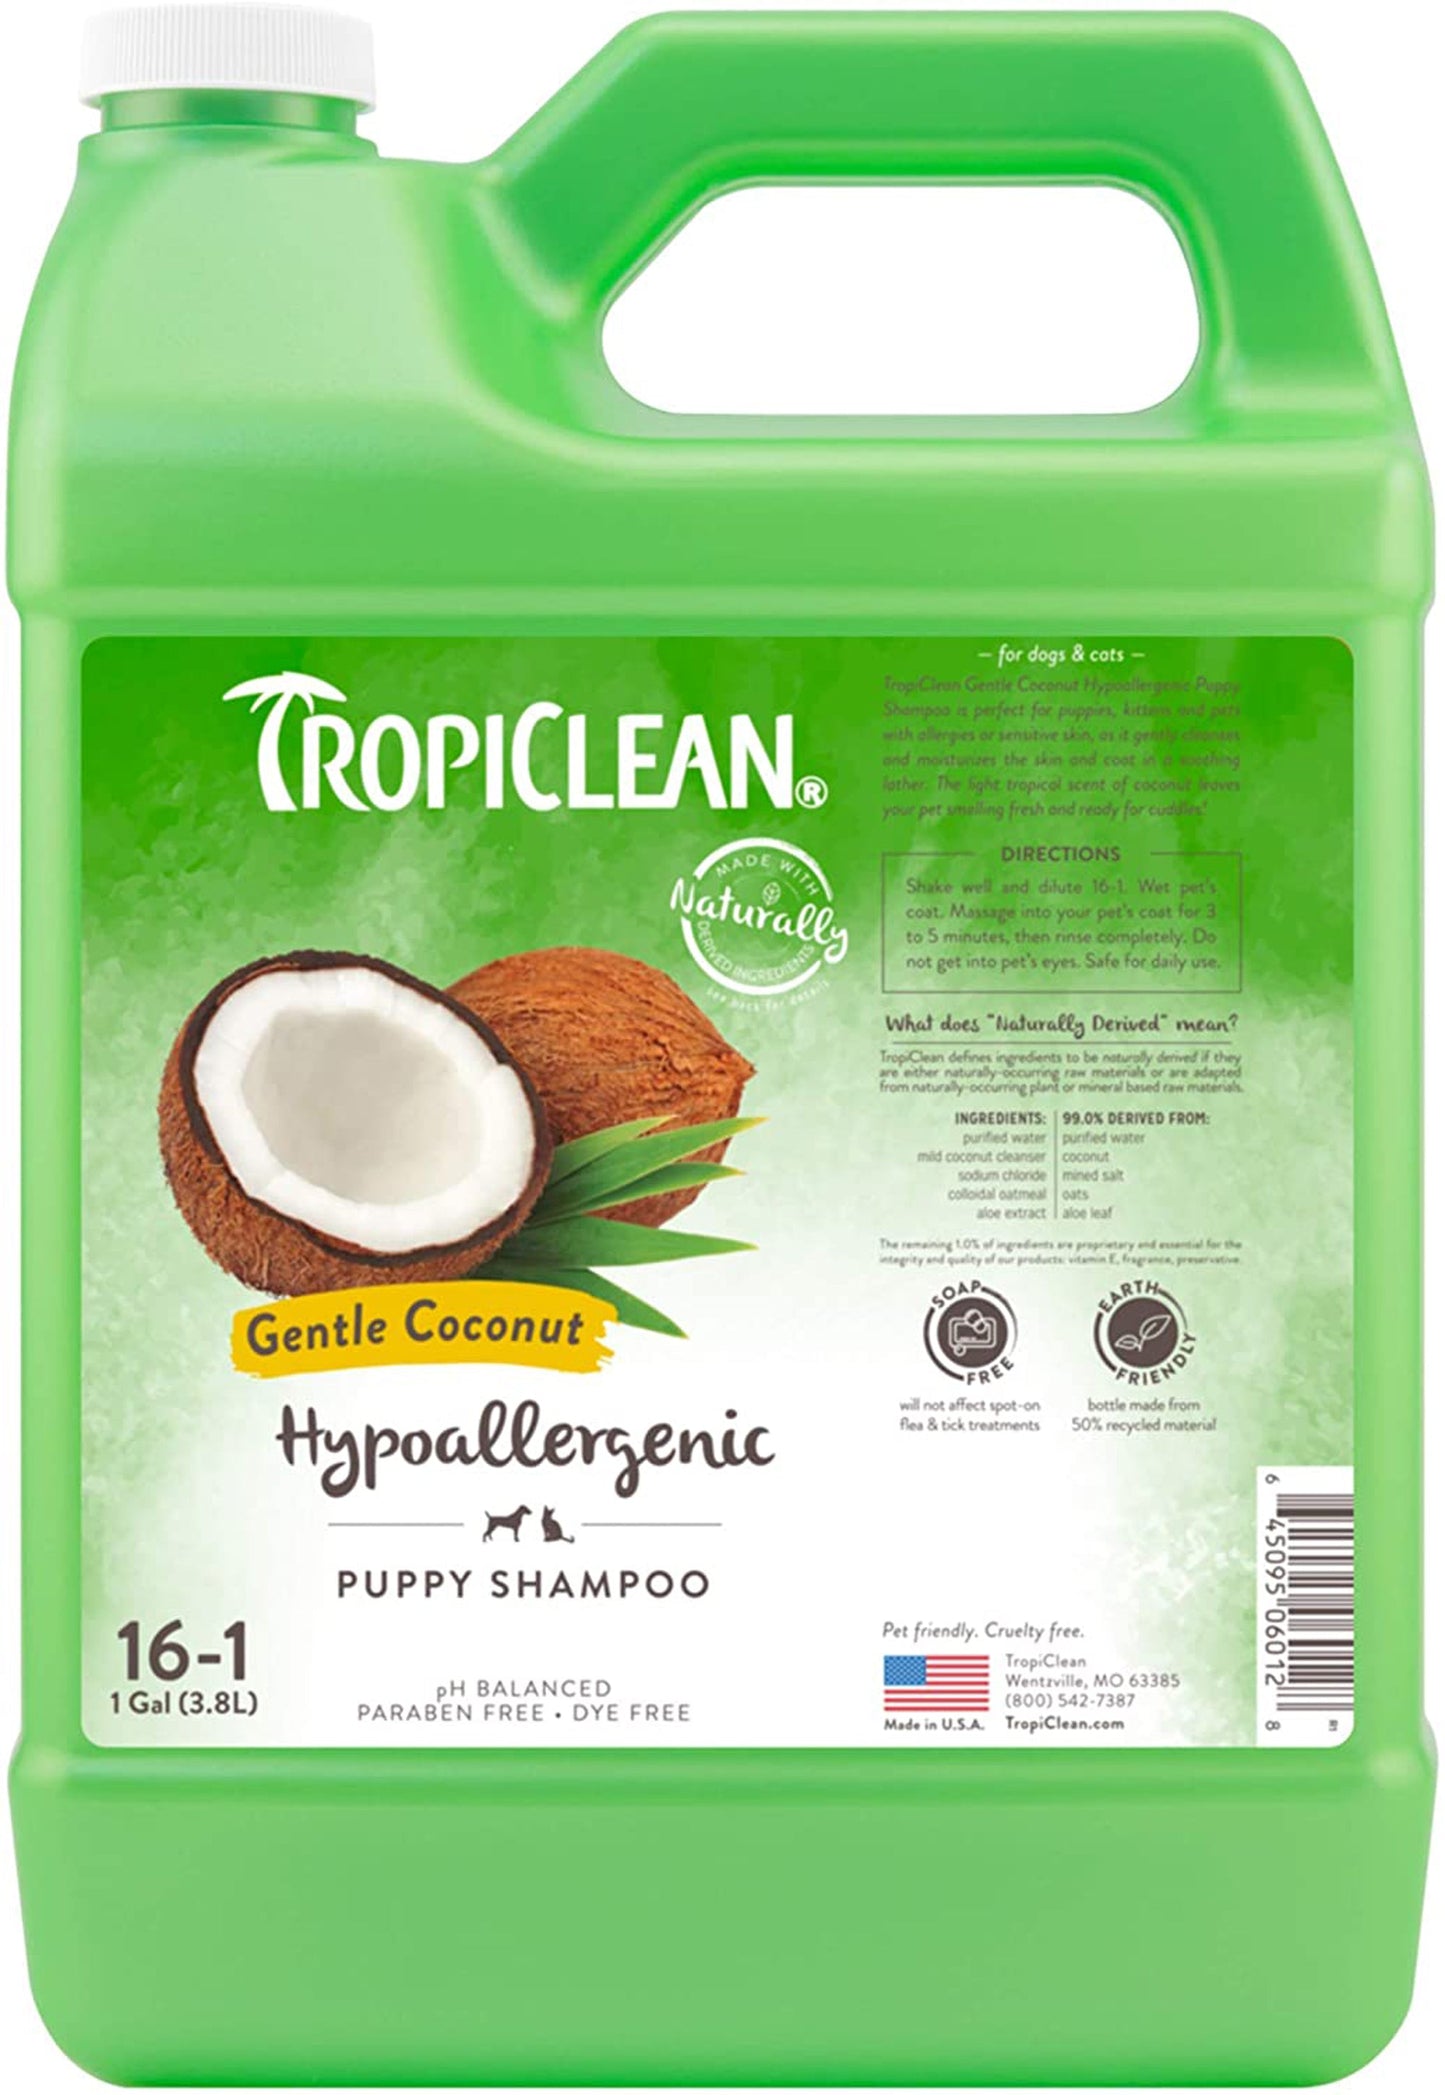 TropiClean Gentle Coconut Hypoallergenic Puppy and Kitten Shampoo 1ea/1 gal